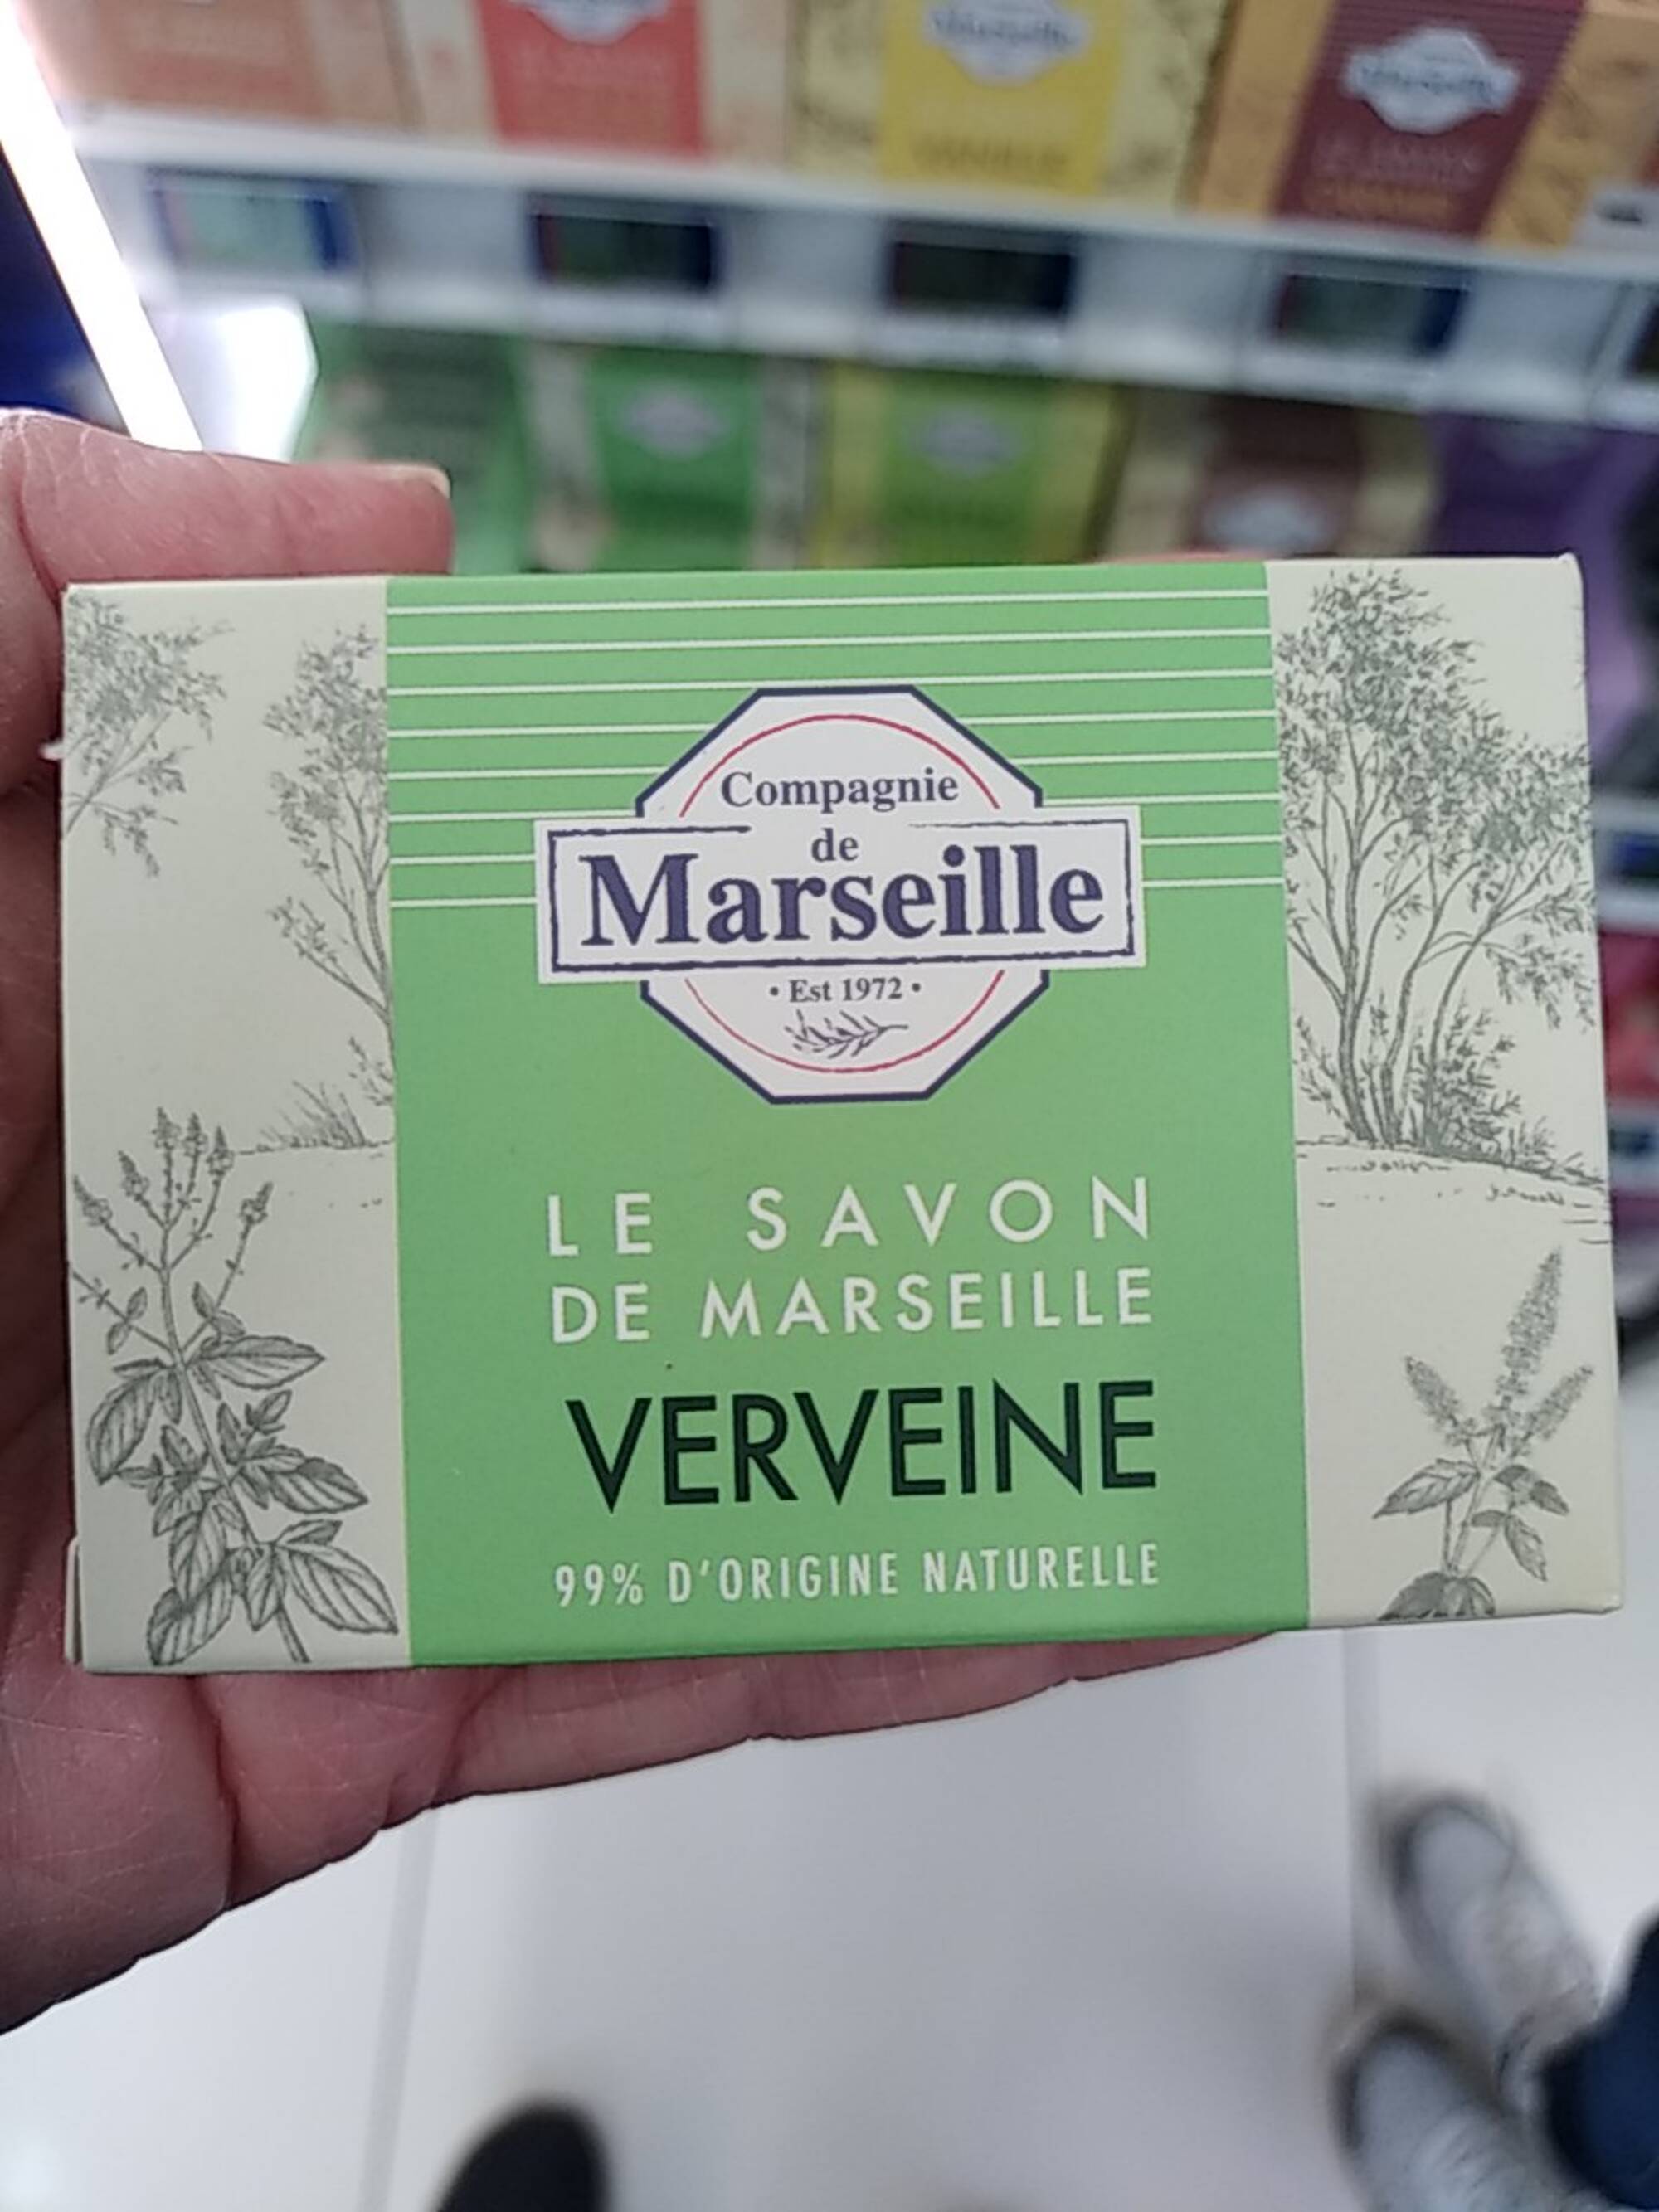 COMPAGNIE DE MARSEILLE - Verveine  - Le savon de Marseille 